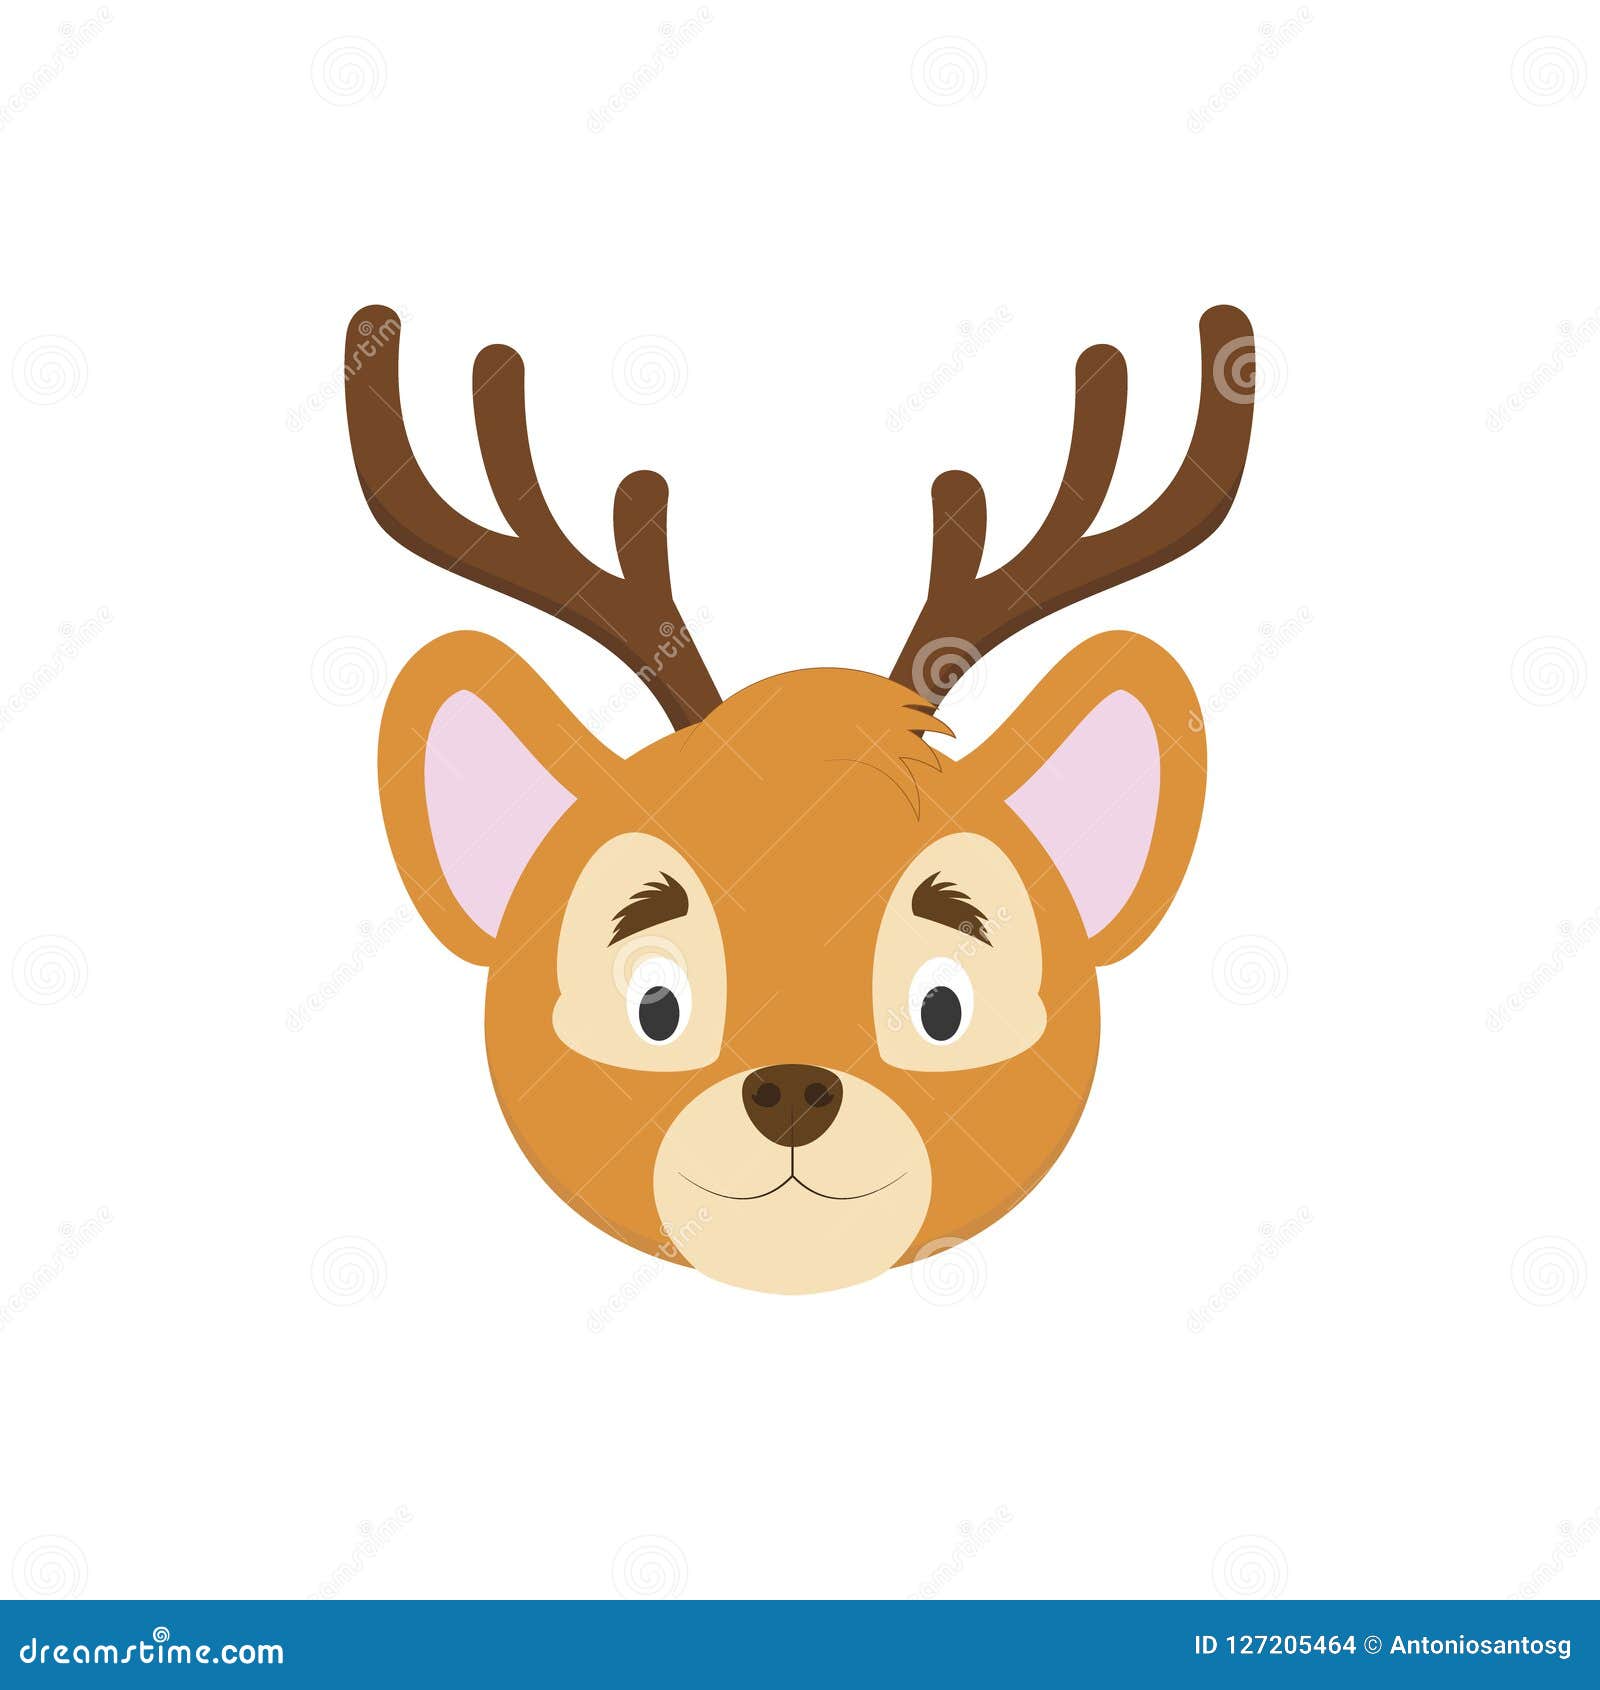 Deer Face In Cartoon Style For Children. Stock Vector